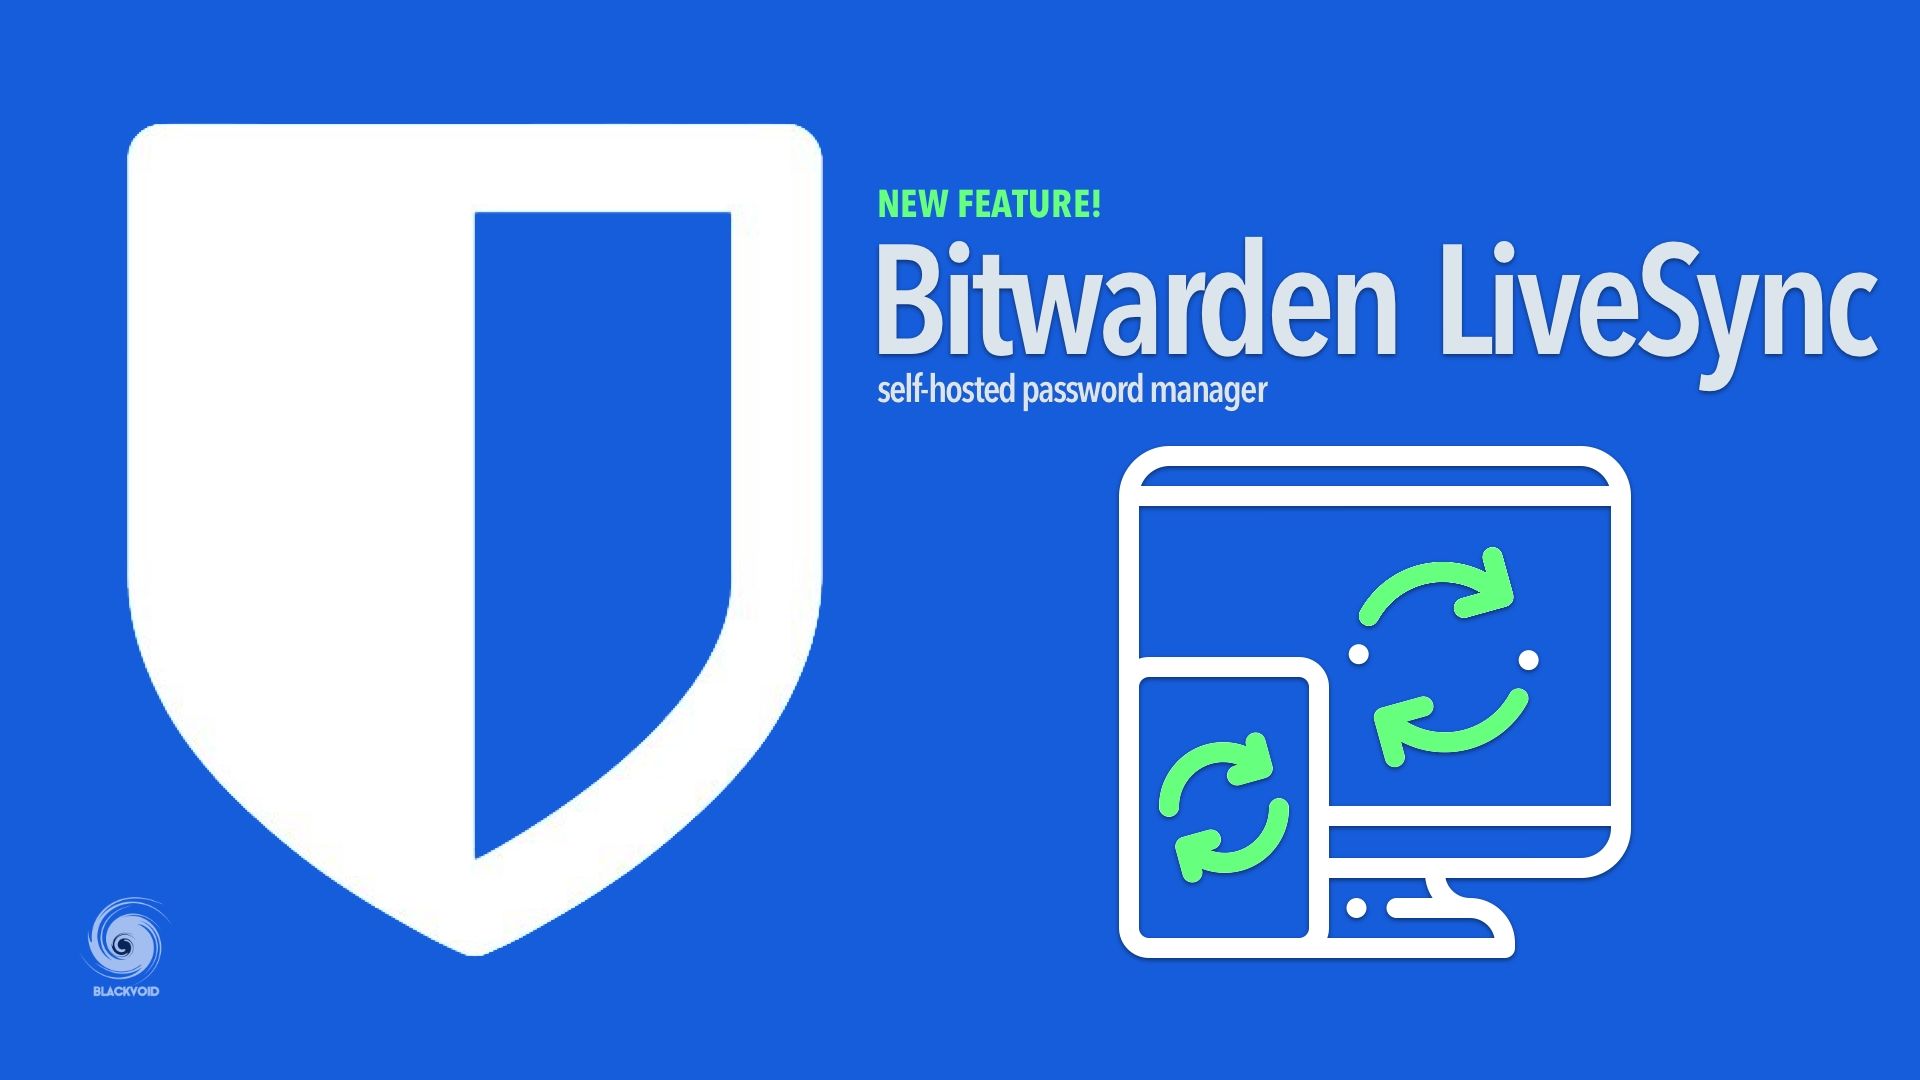 Bitwarden - LiveSync feature